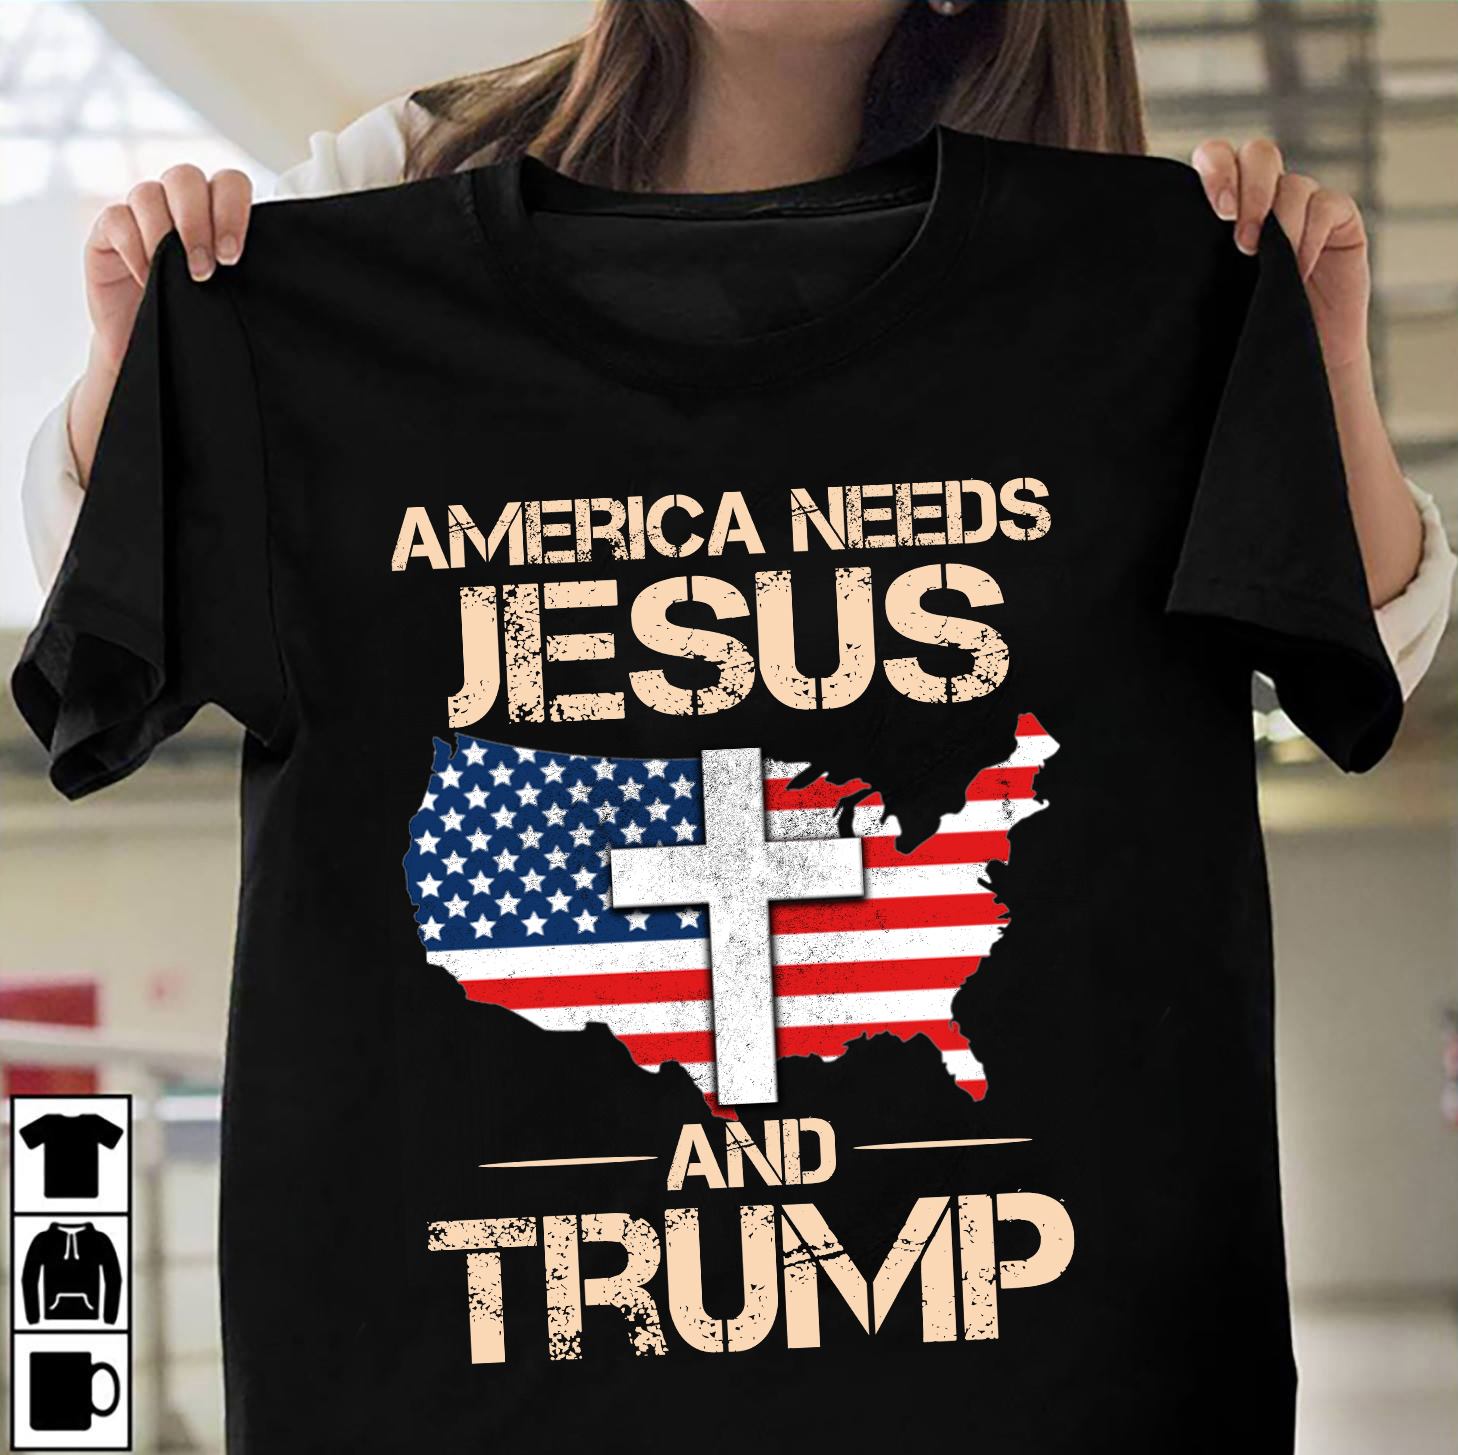 America needs Jesus and Trump - Donald Trump America president, Nation under god